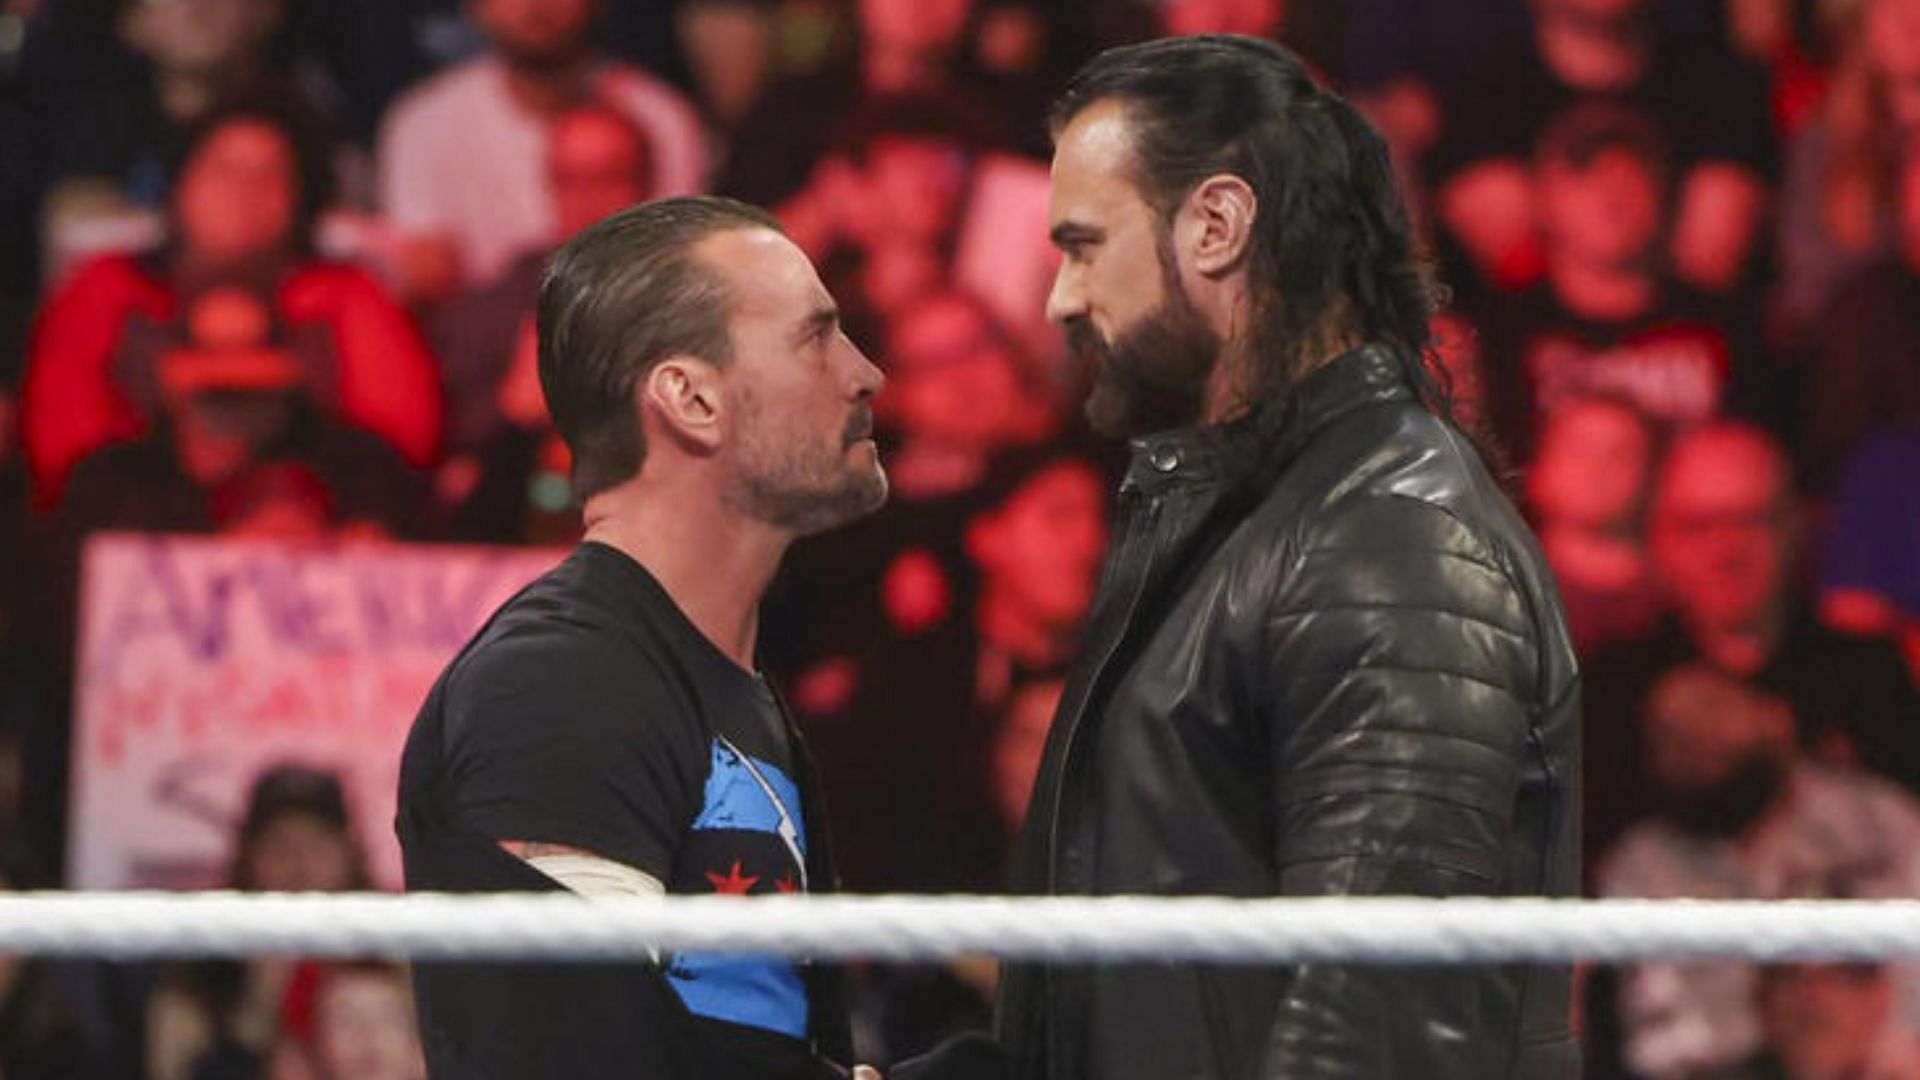 Drew McIntyre confronted CM Punk on WWE RAW